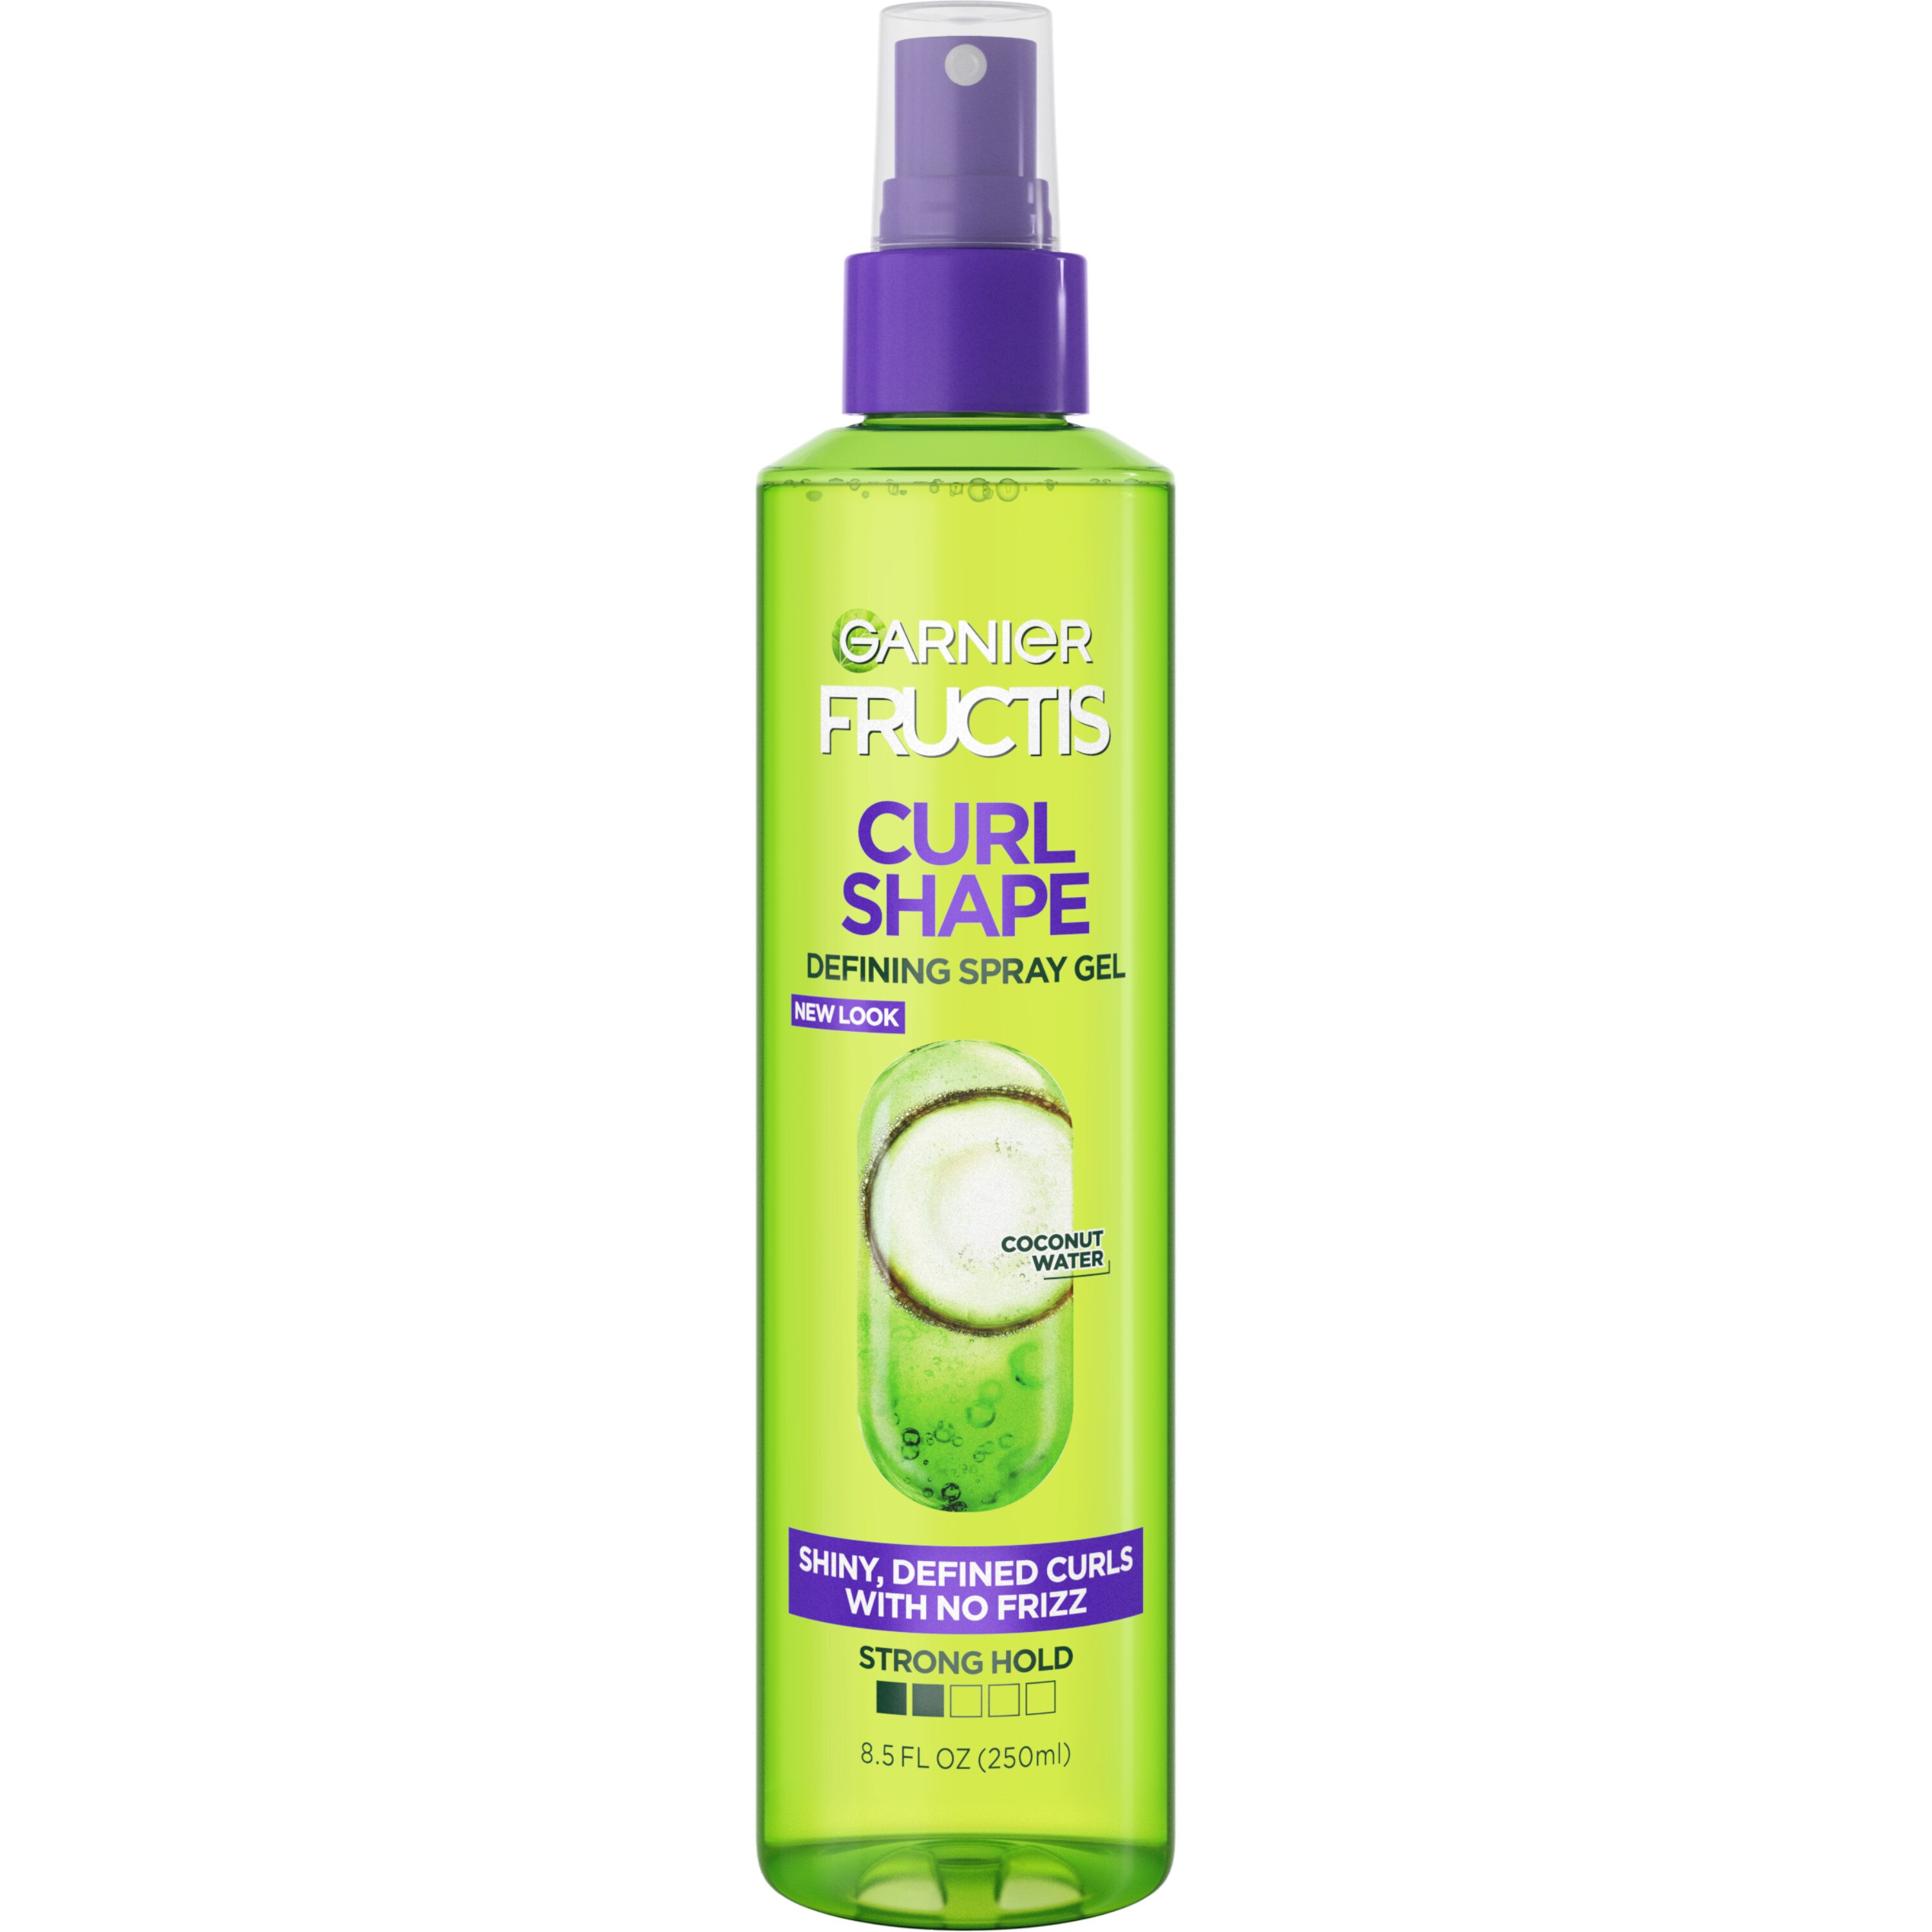 Garnier Fructis Curl Shape Spray Gel,  OZ | Pick Up In Store TODAY at CVS